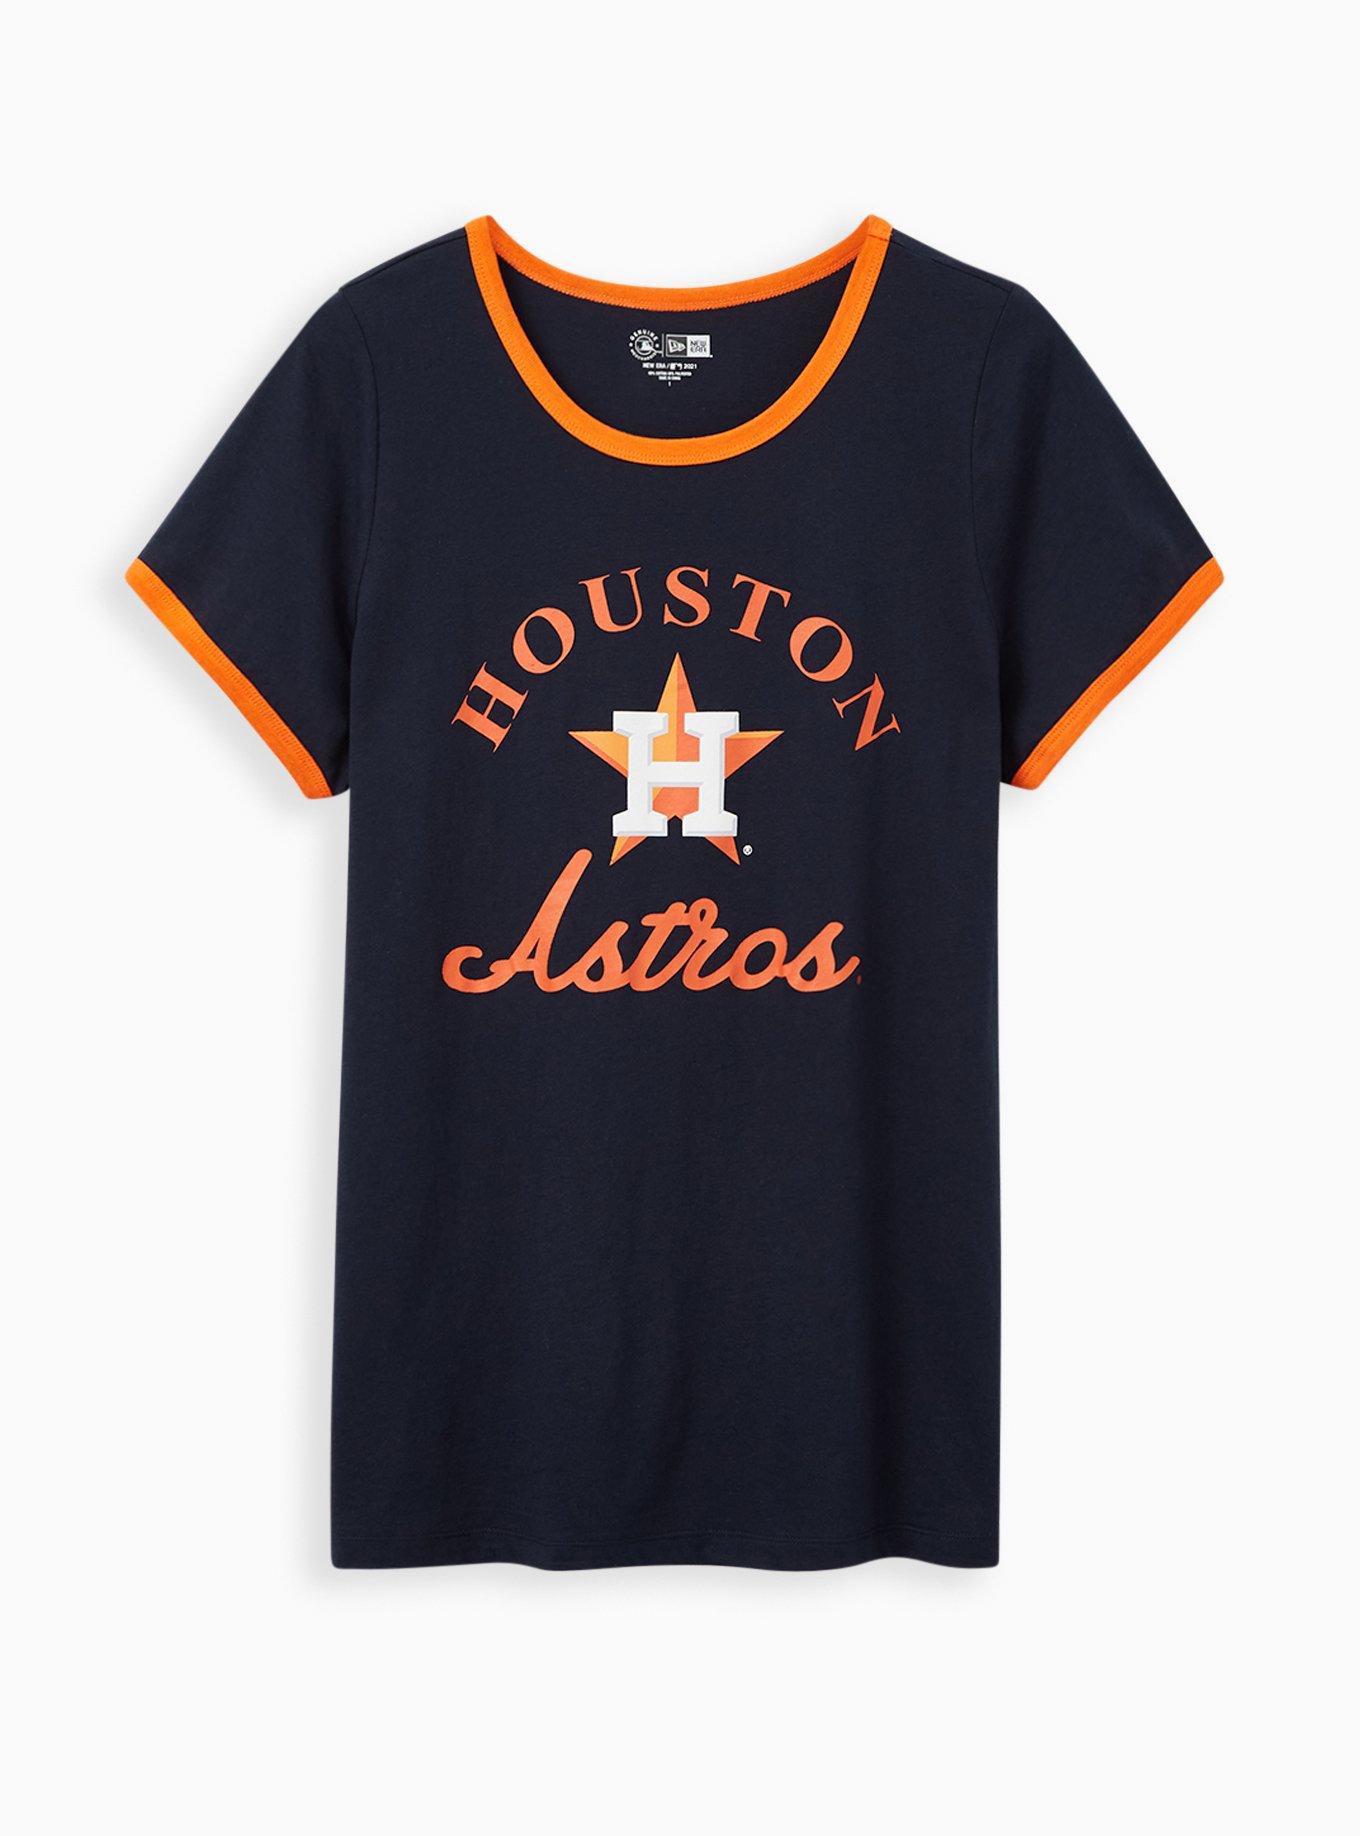 Plus Size - Classic Fit Ringer Tee - MLB Houston Astros Tee Navy - Torrid